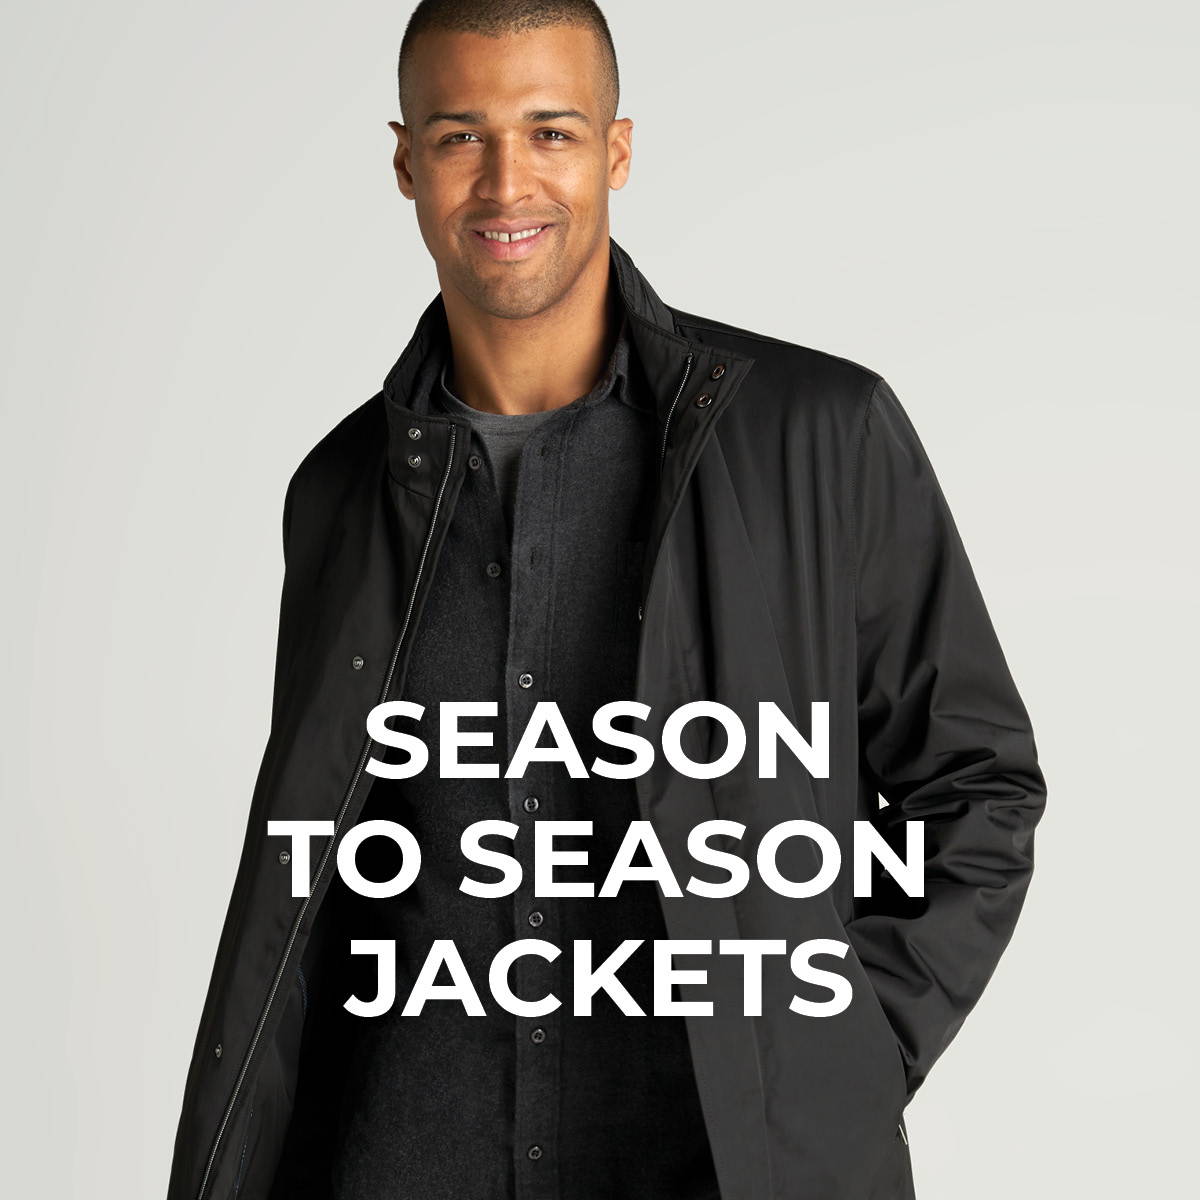 Season to Season Jackets from American Tall.  Tall man wearing a black trench coat